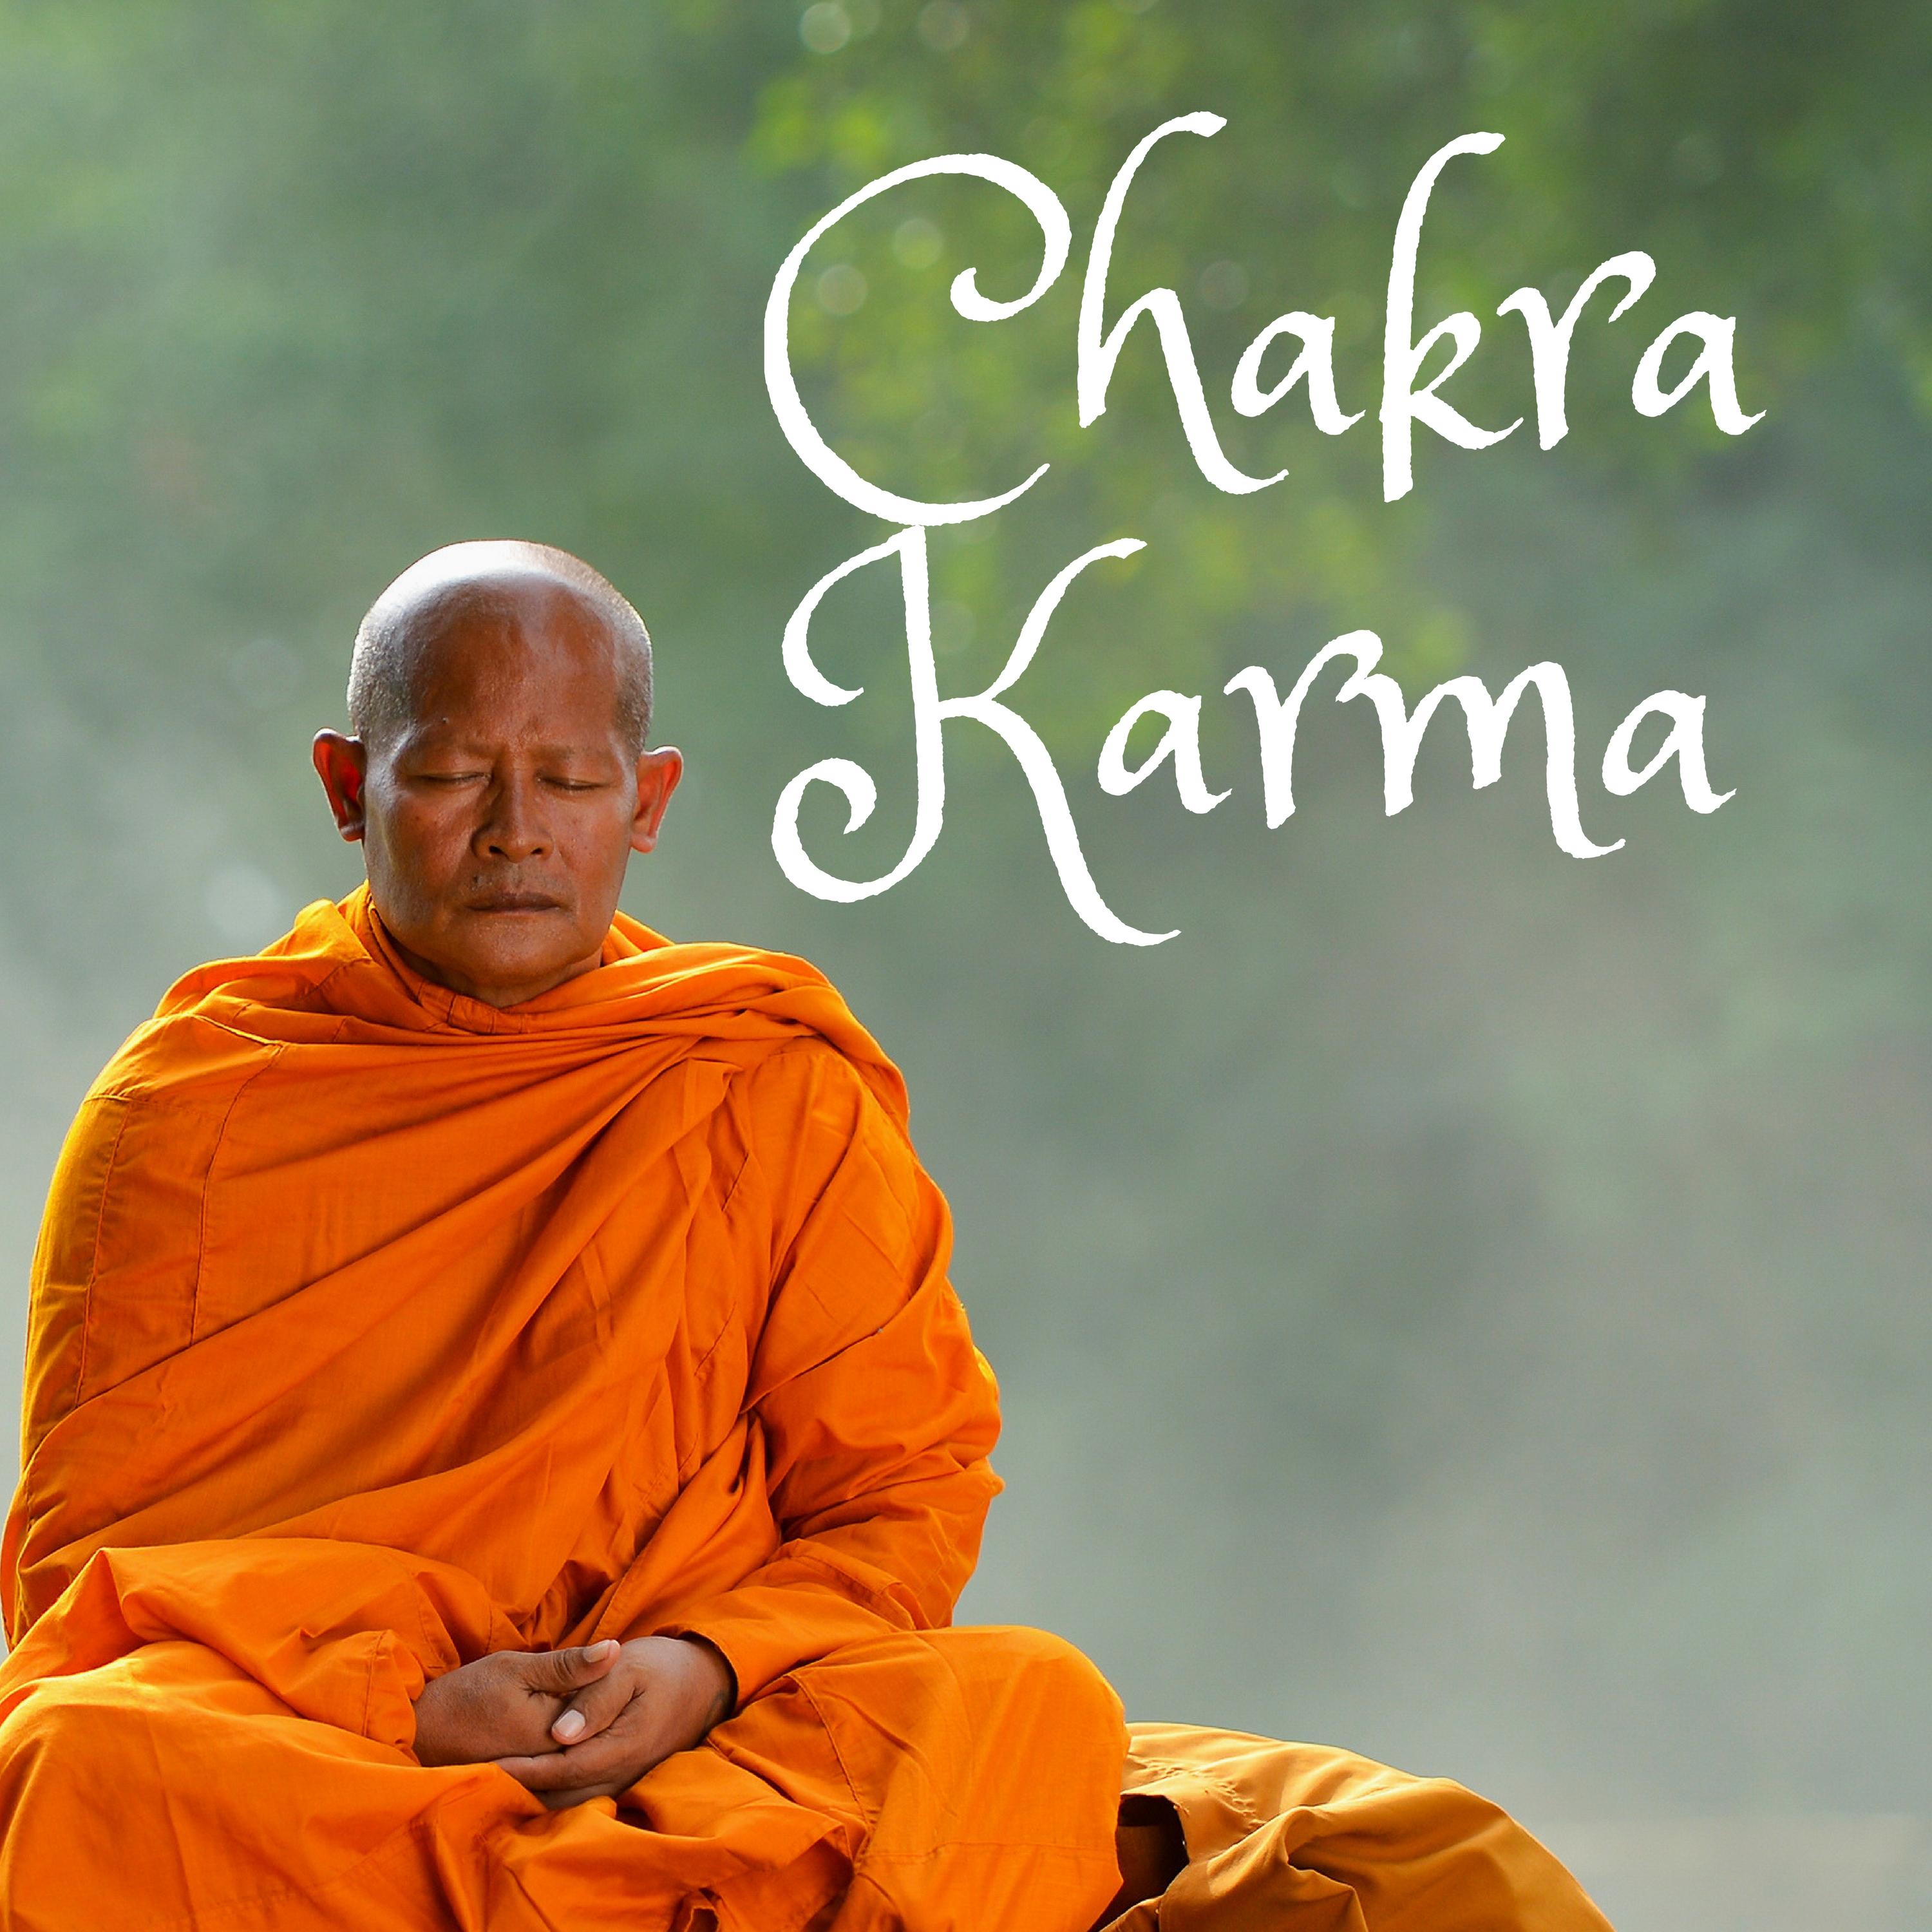 Chakra Karma - Healing Music Kit, Reiki Healing Songs, Sounds of Nature, Relaxation Meditation Music